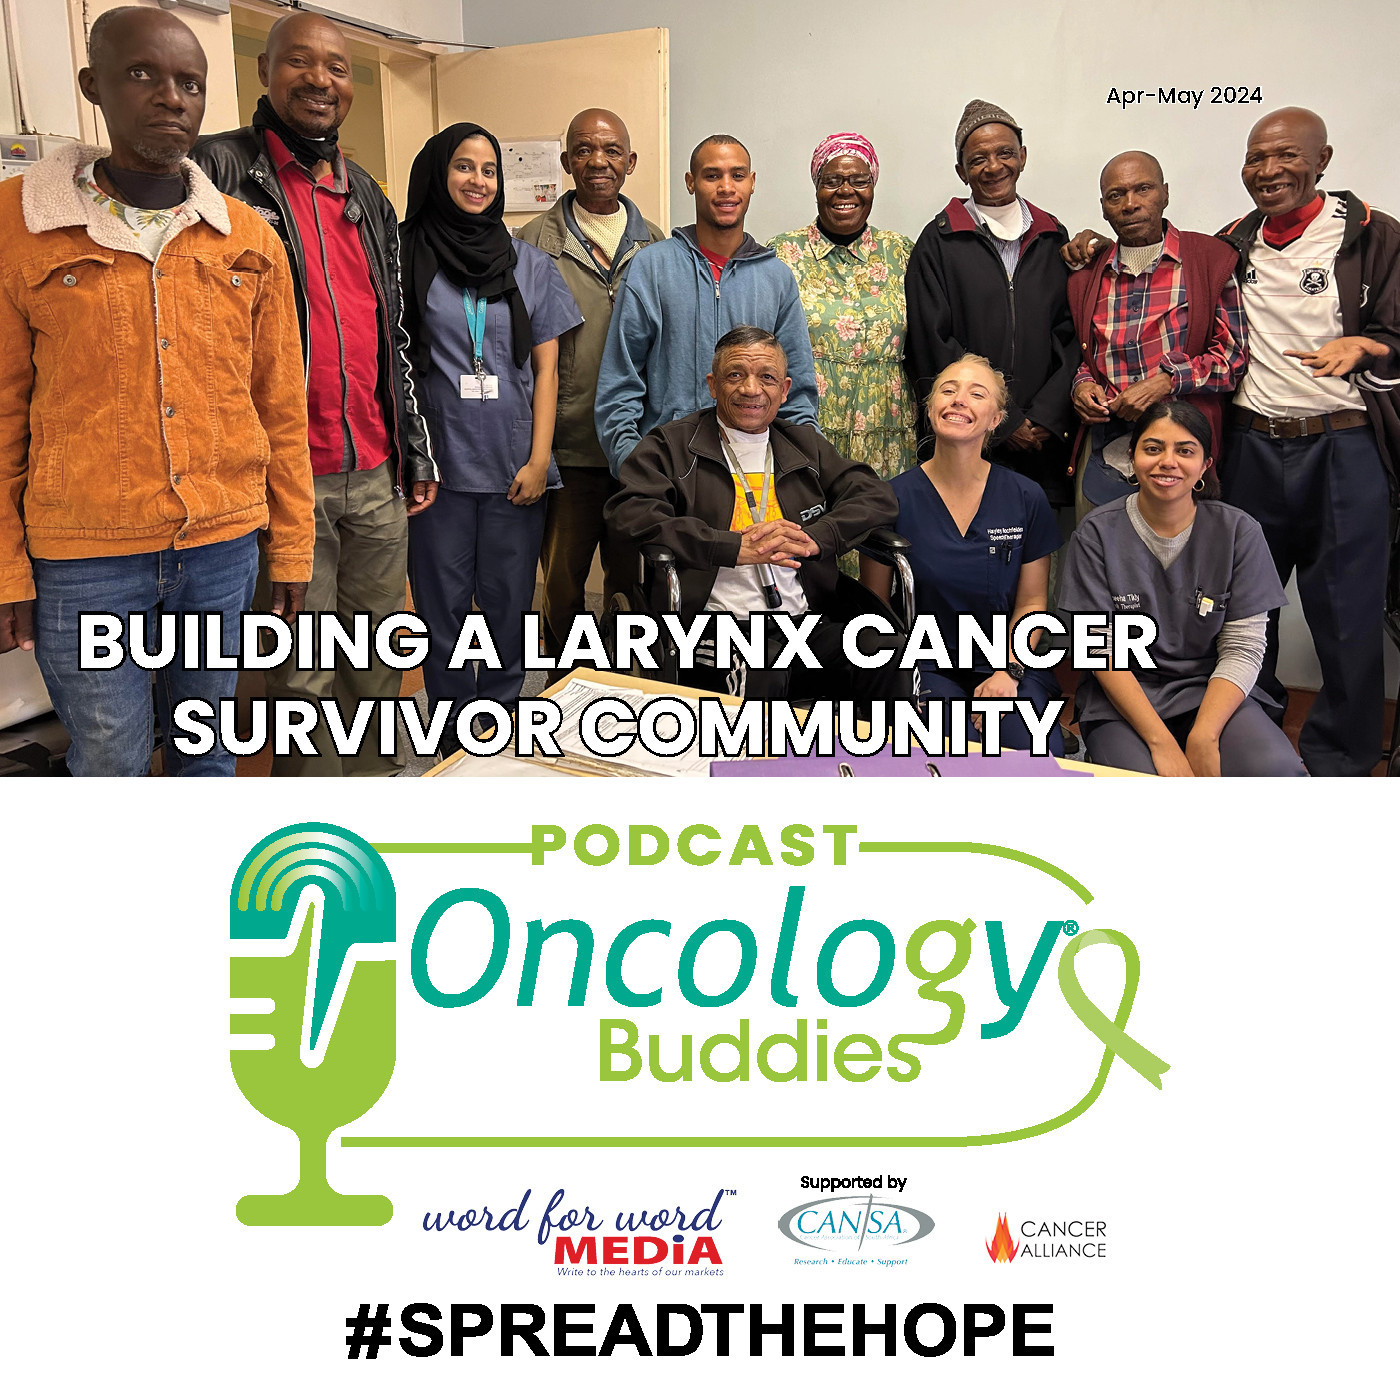 Building a larynx cancer survivor community